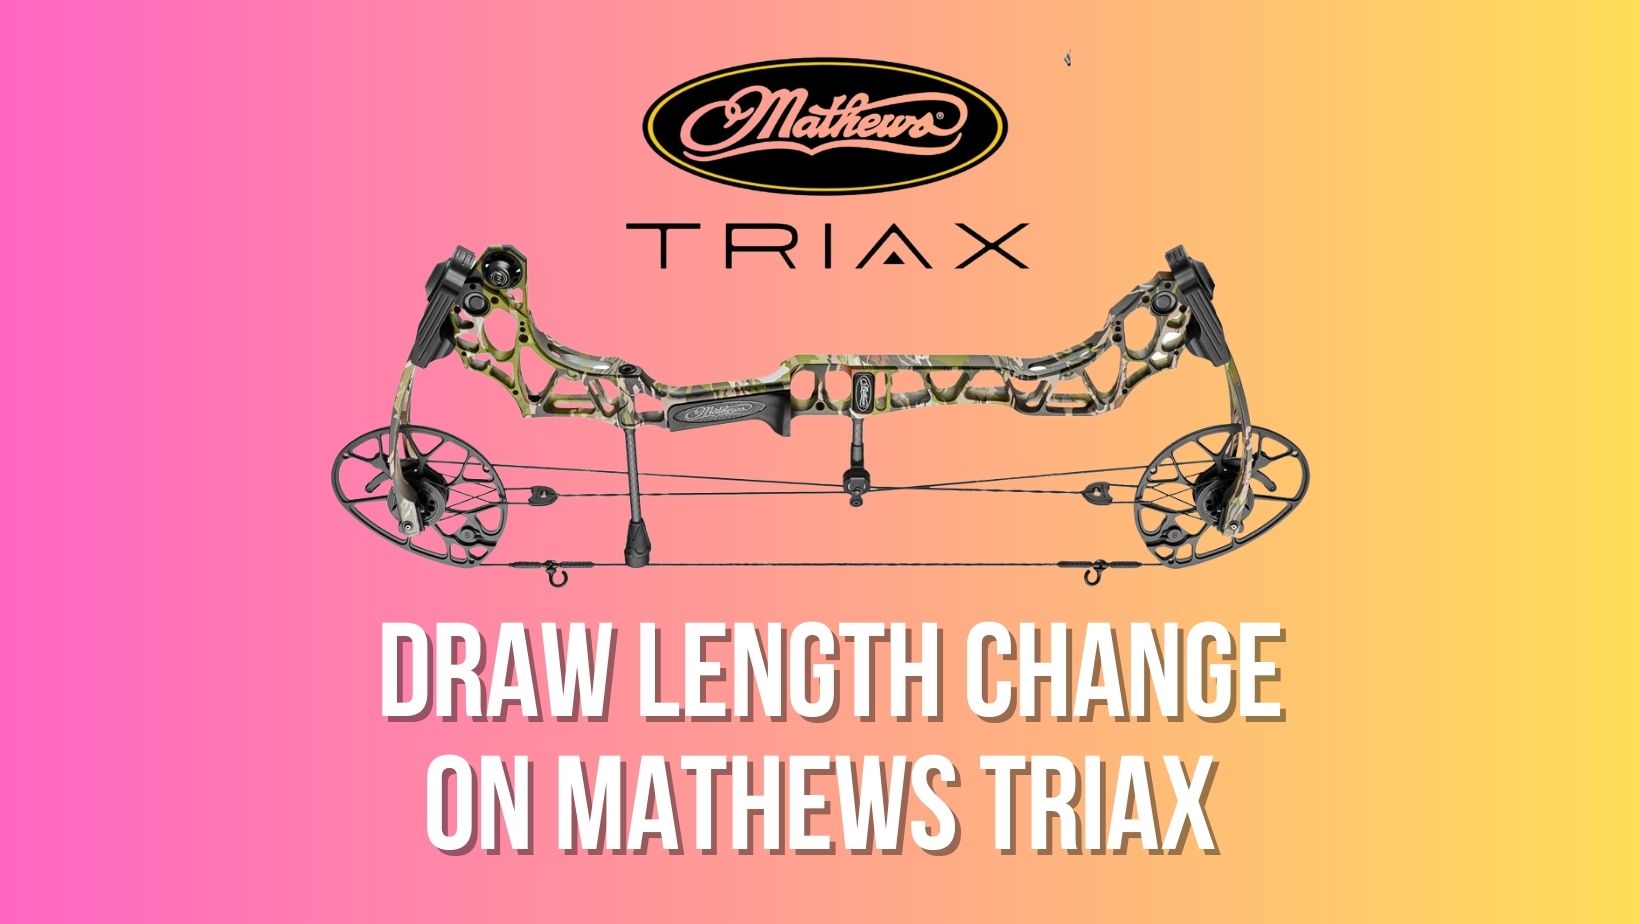 How to Change Draw Length on Mathews Triax